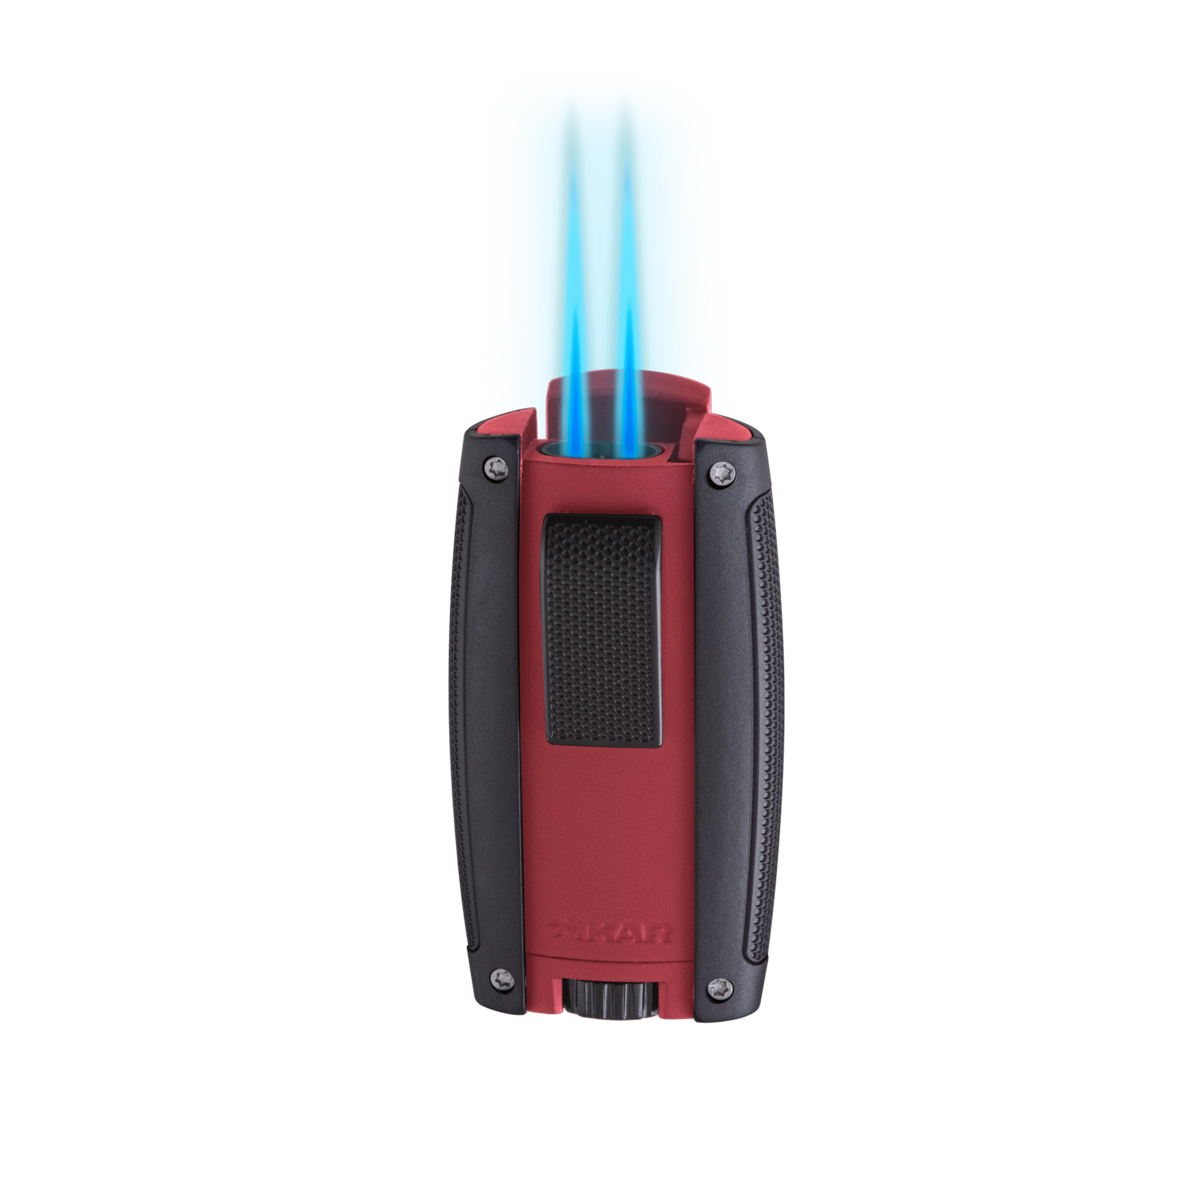 Xikar Turismo Lighter | Double Jet Flame